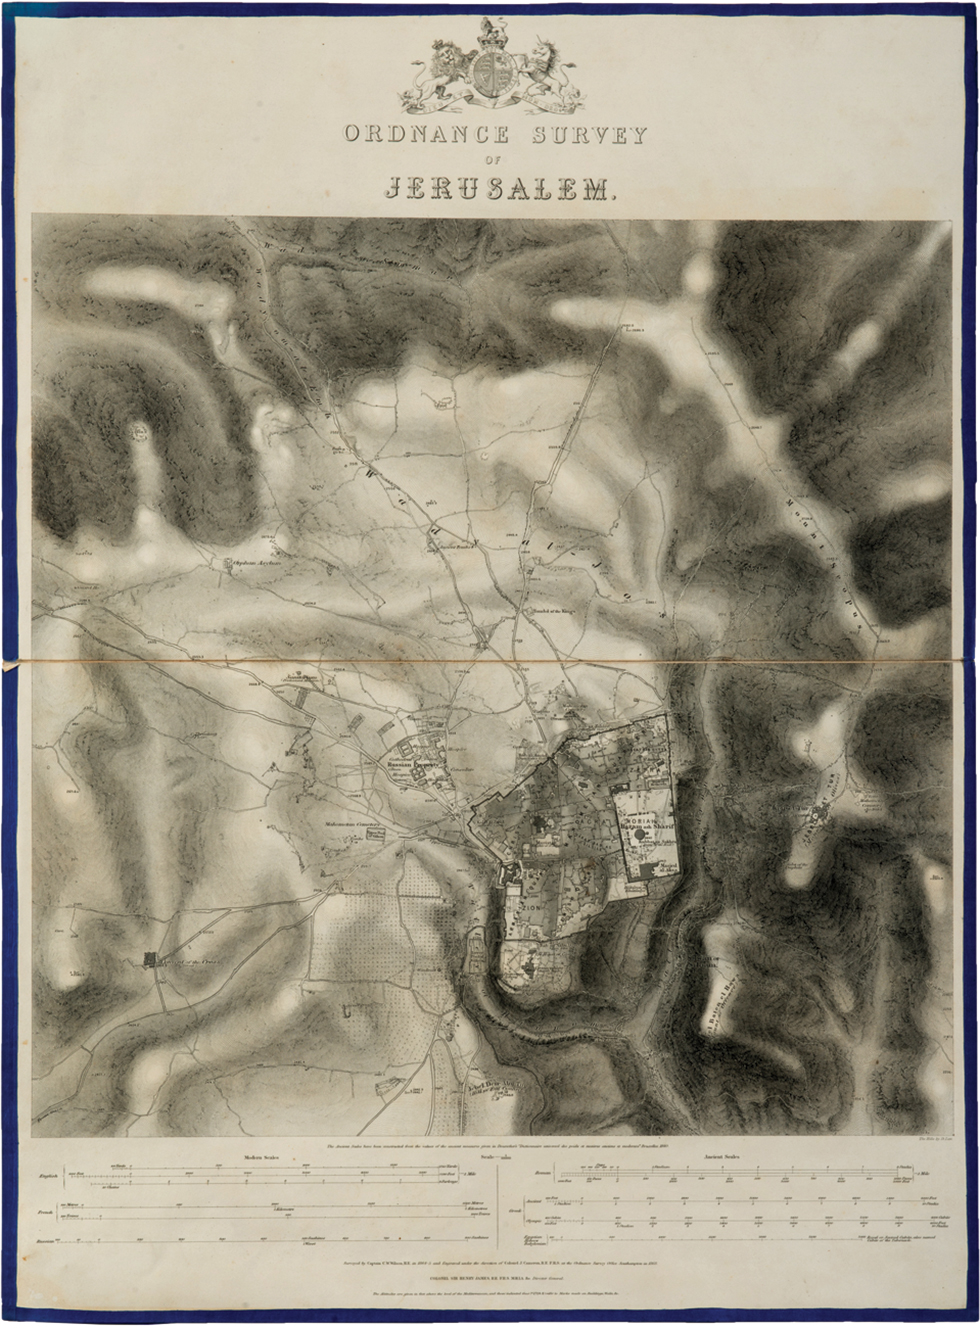 Captain Charles Wilson cartograhic survey of Jerusalem (Kedem auction house)